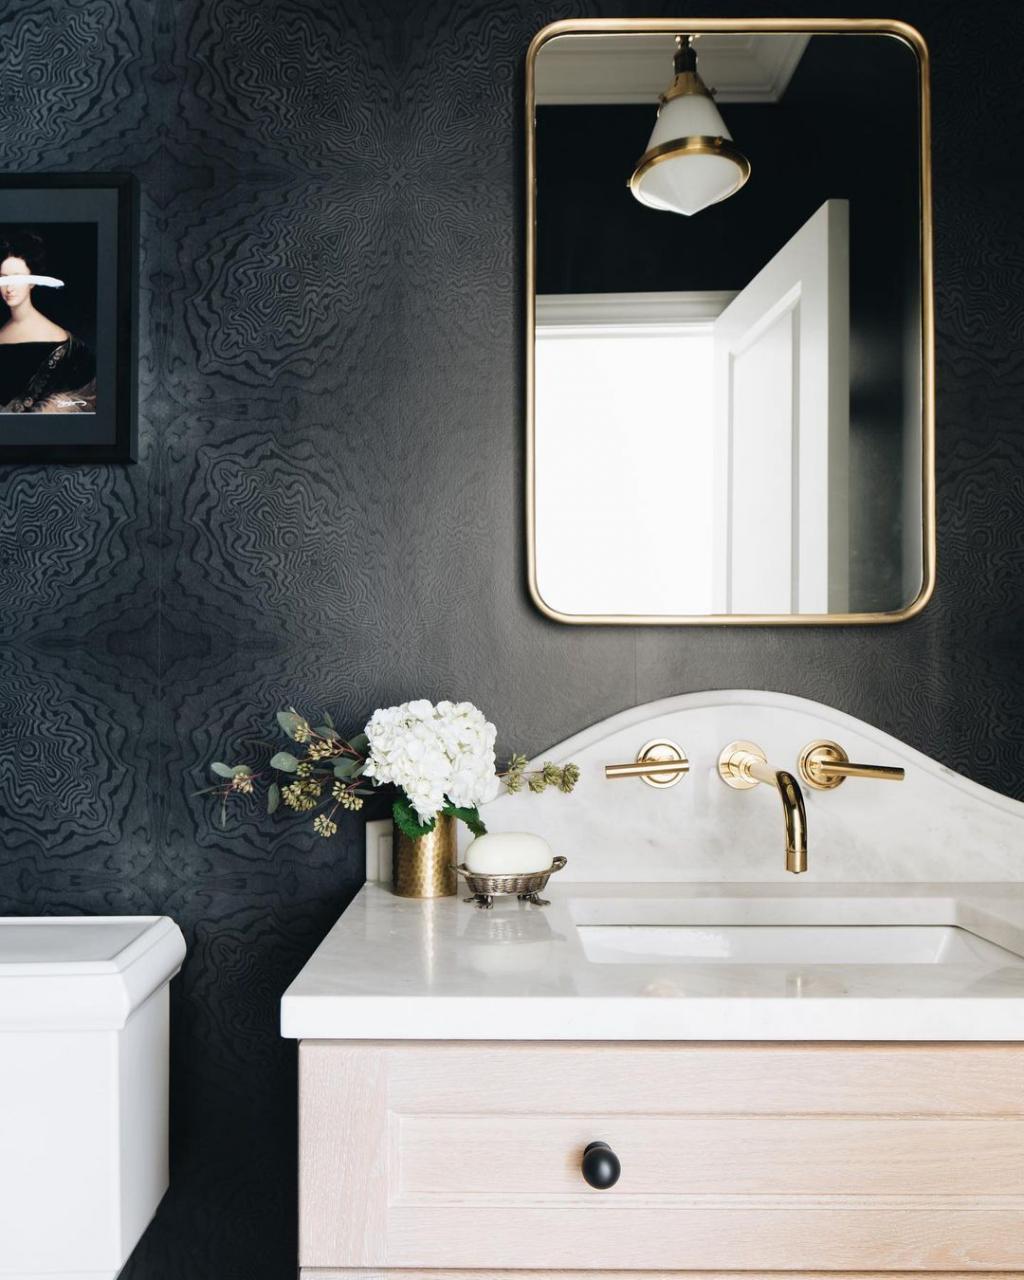 12 Dark + Moody Interiors We Love Bathroom decor, Moody interiors